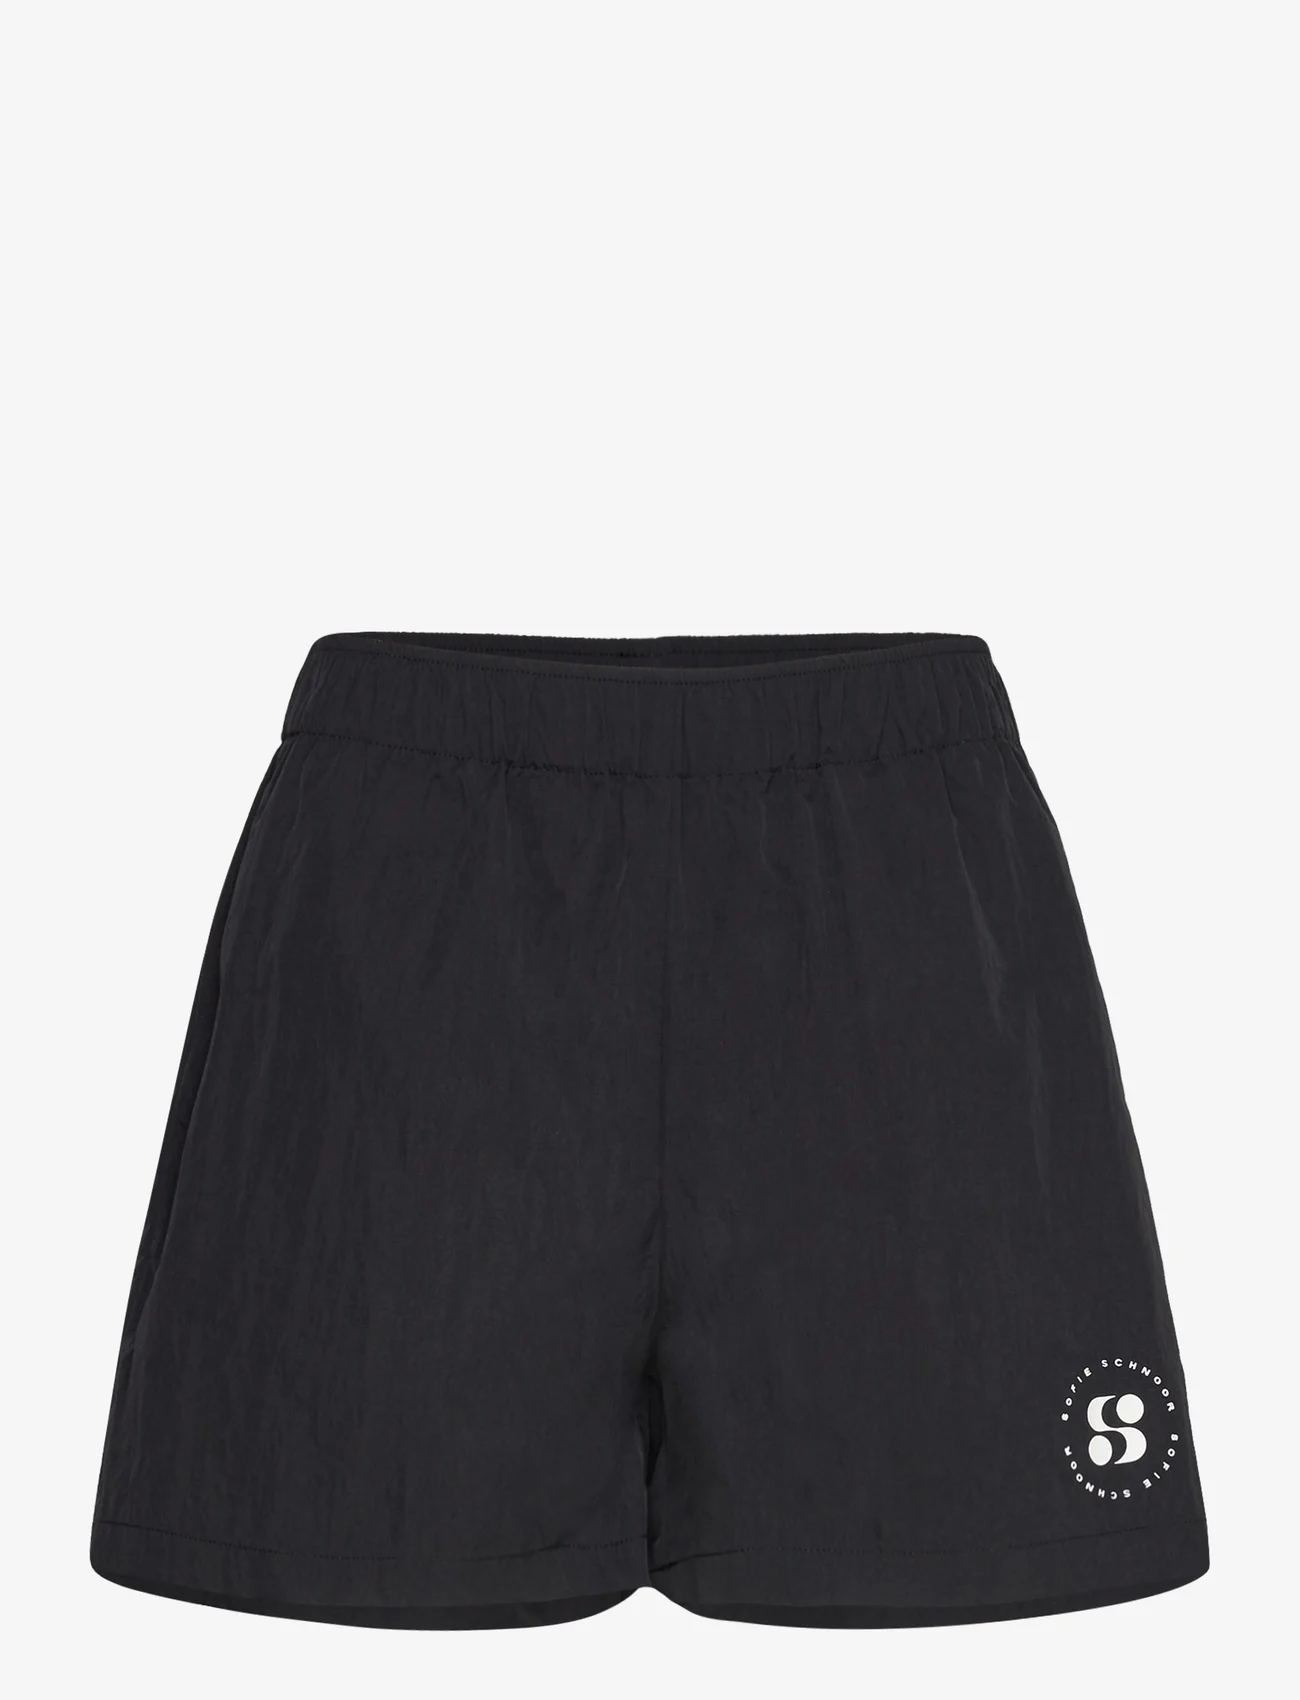 Sofie Schnoor - Shorts - sweat shorts - black - 0